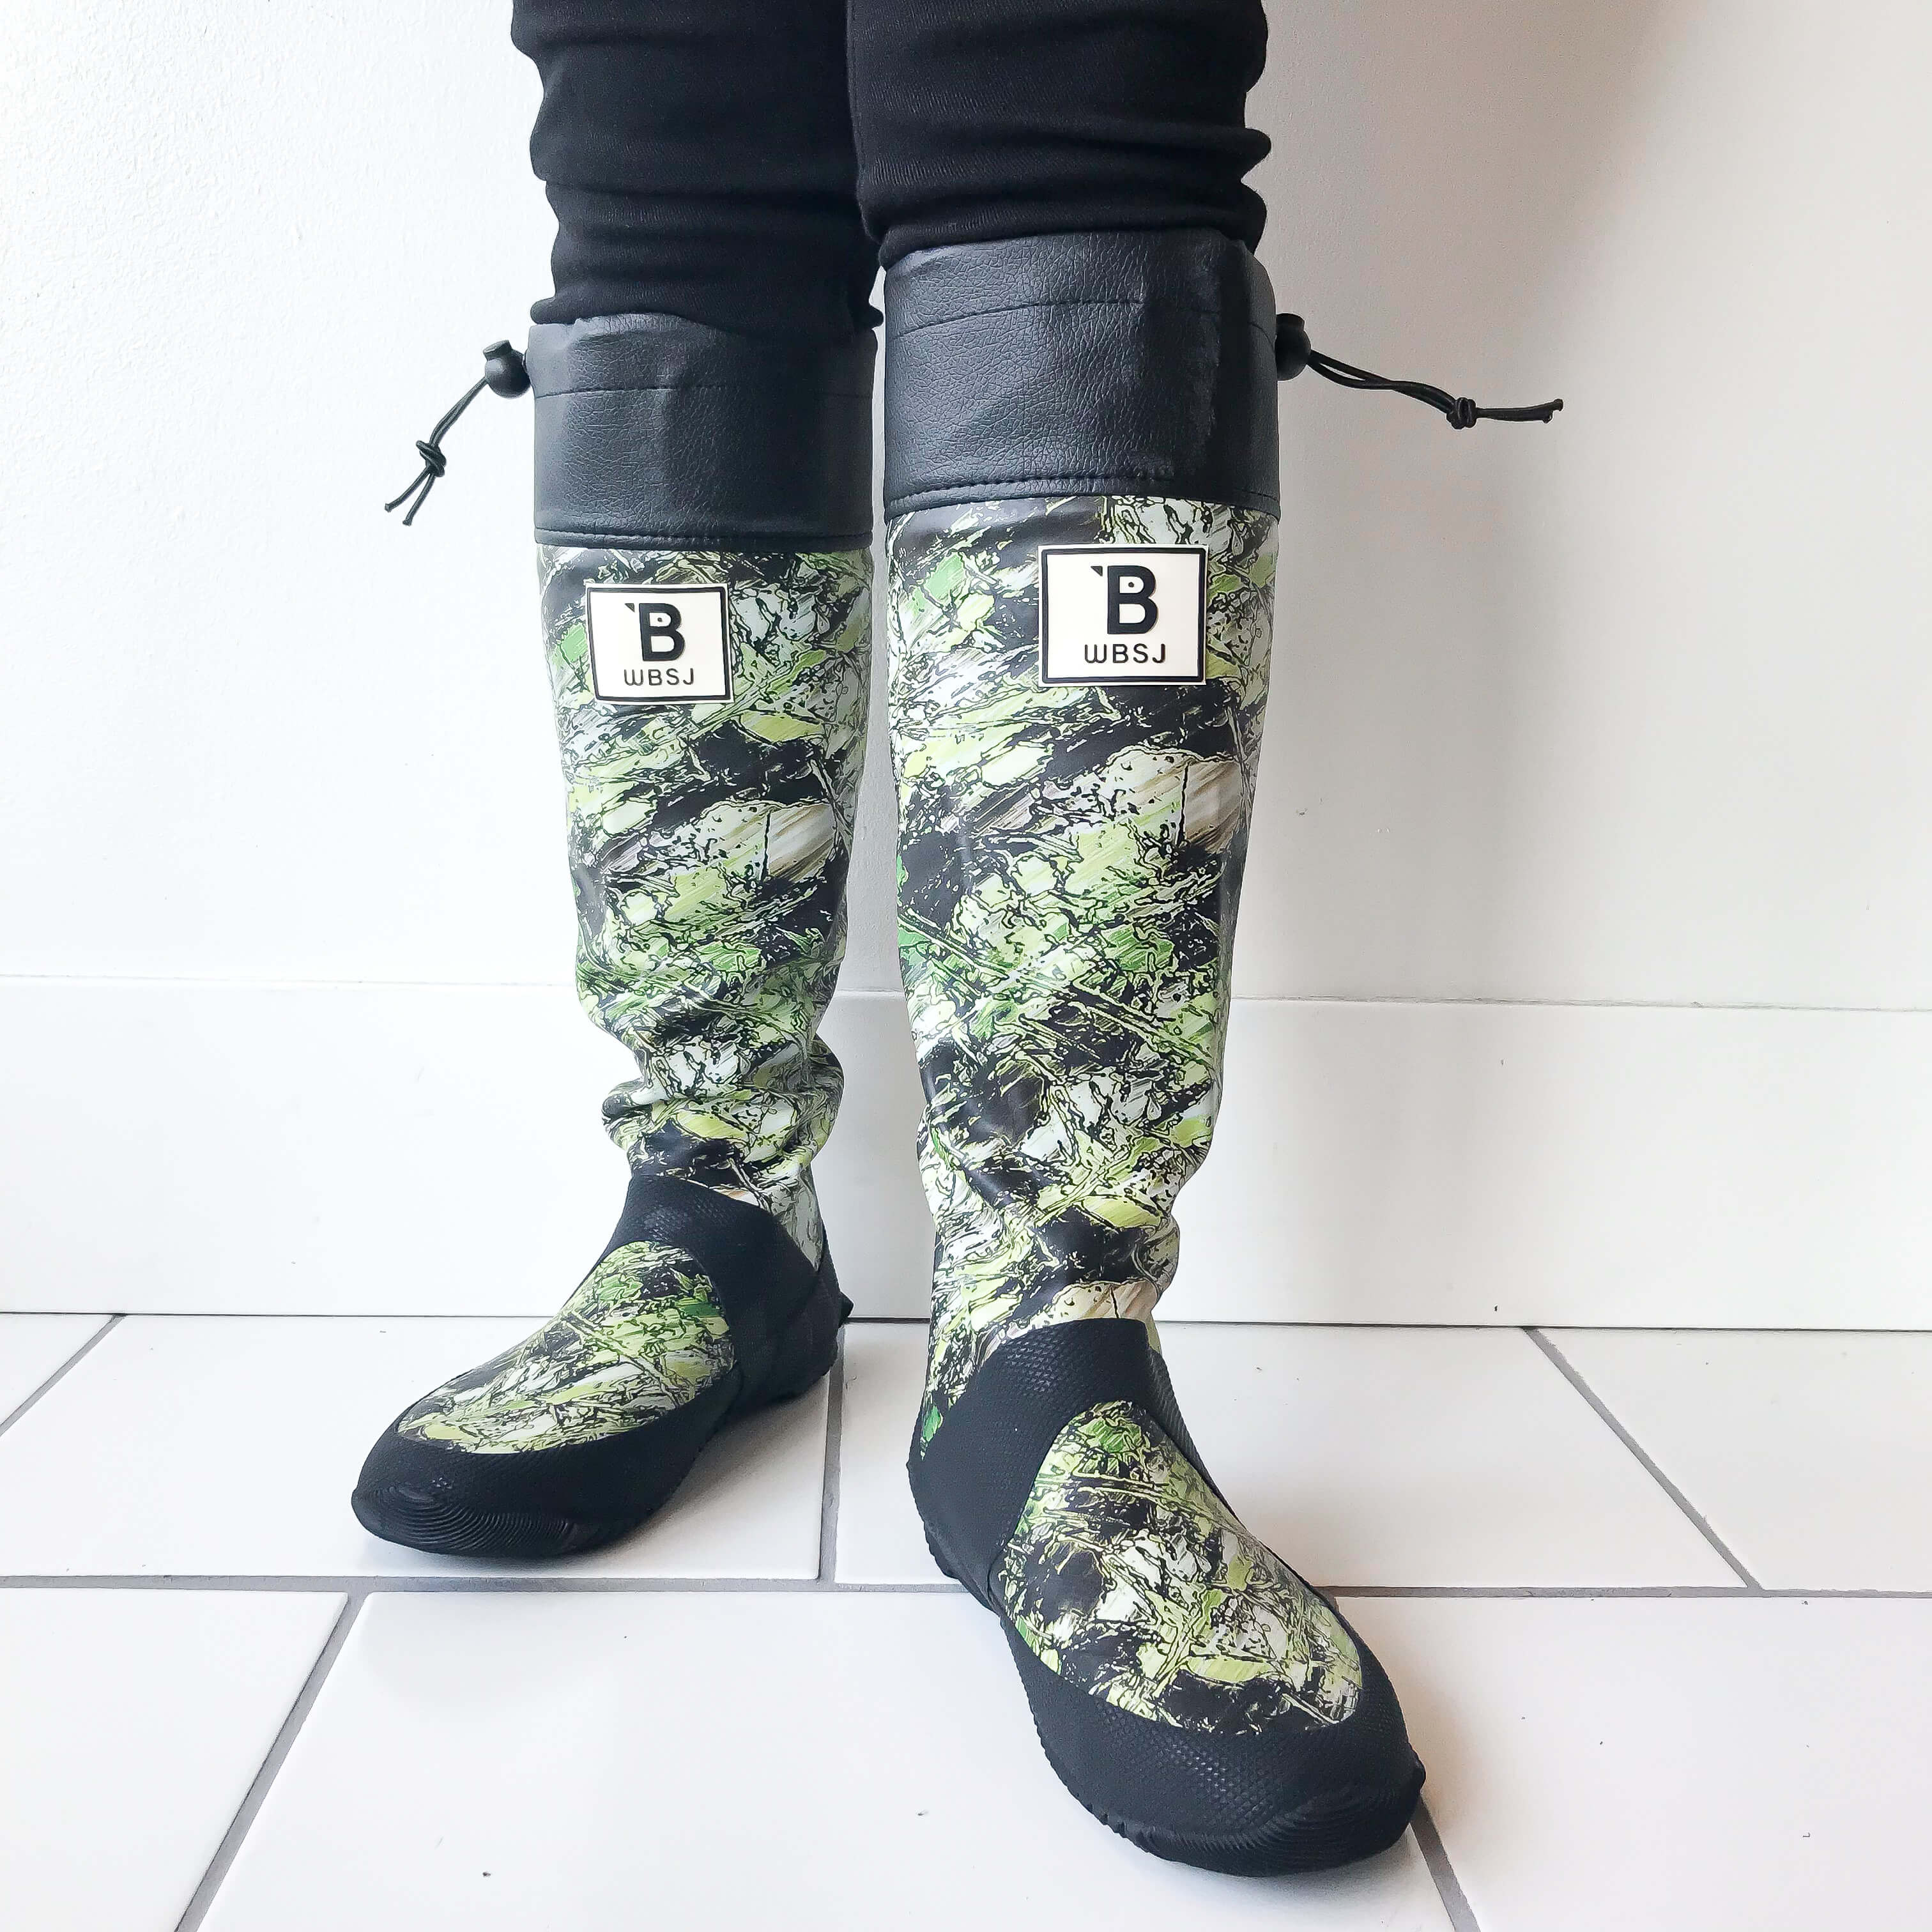 WBSJ Rain Boots - Camouflage